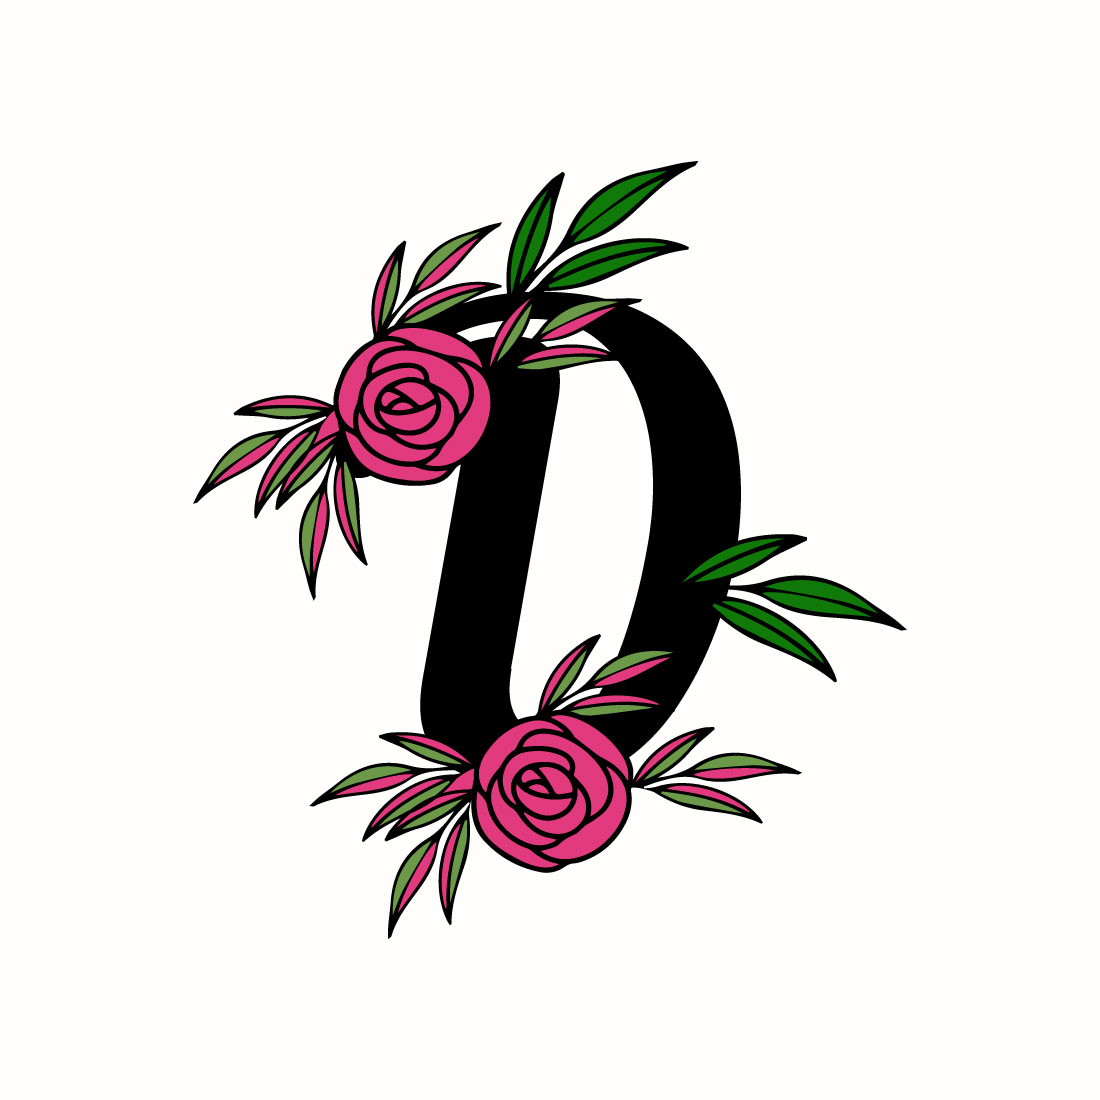 Free D letter logo cover image.